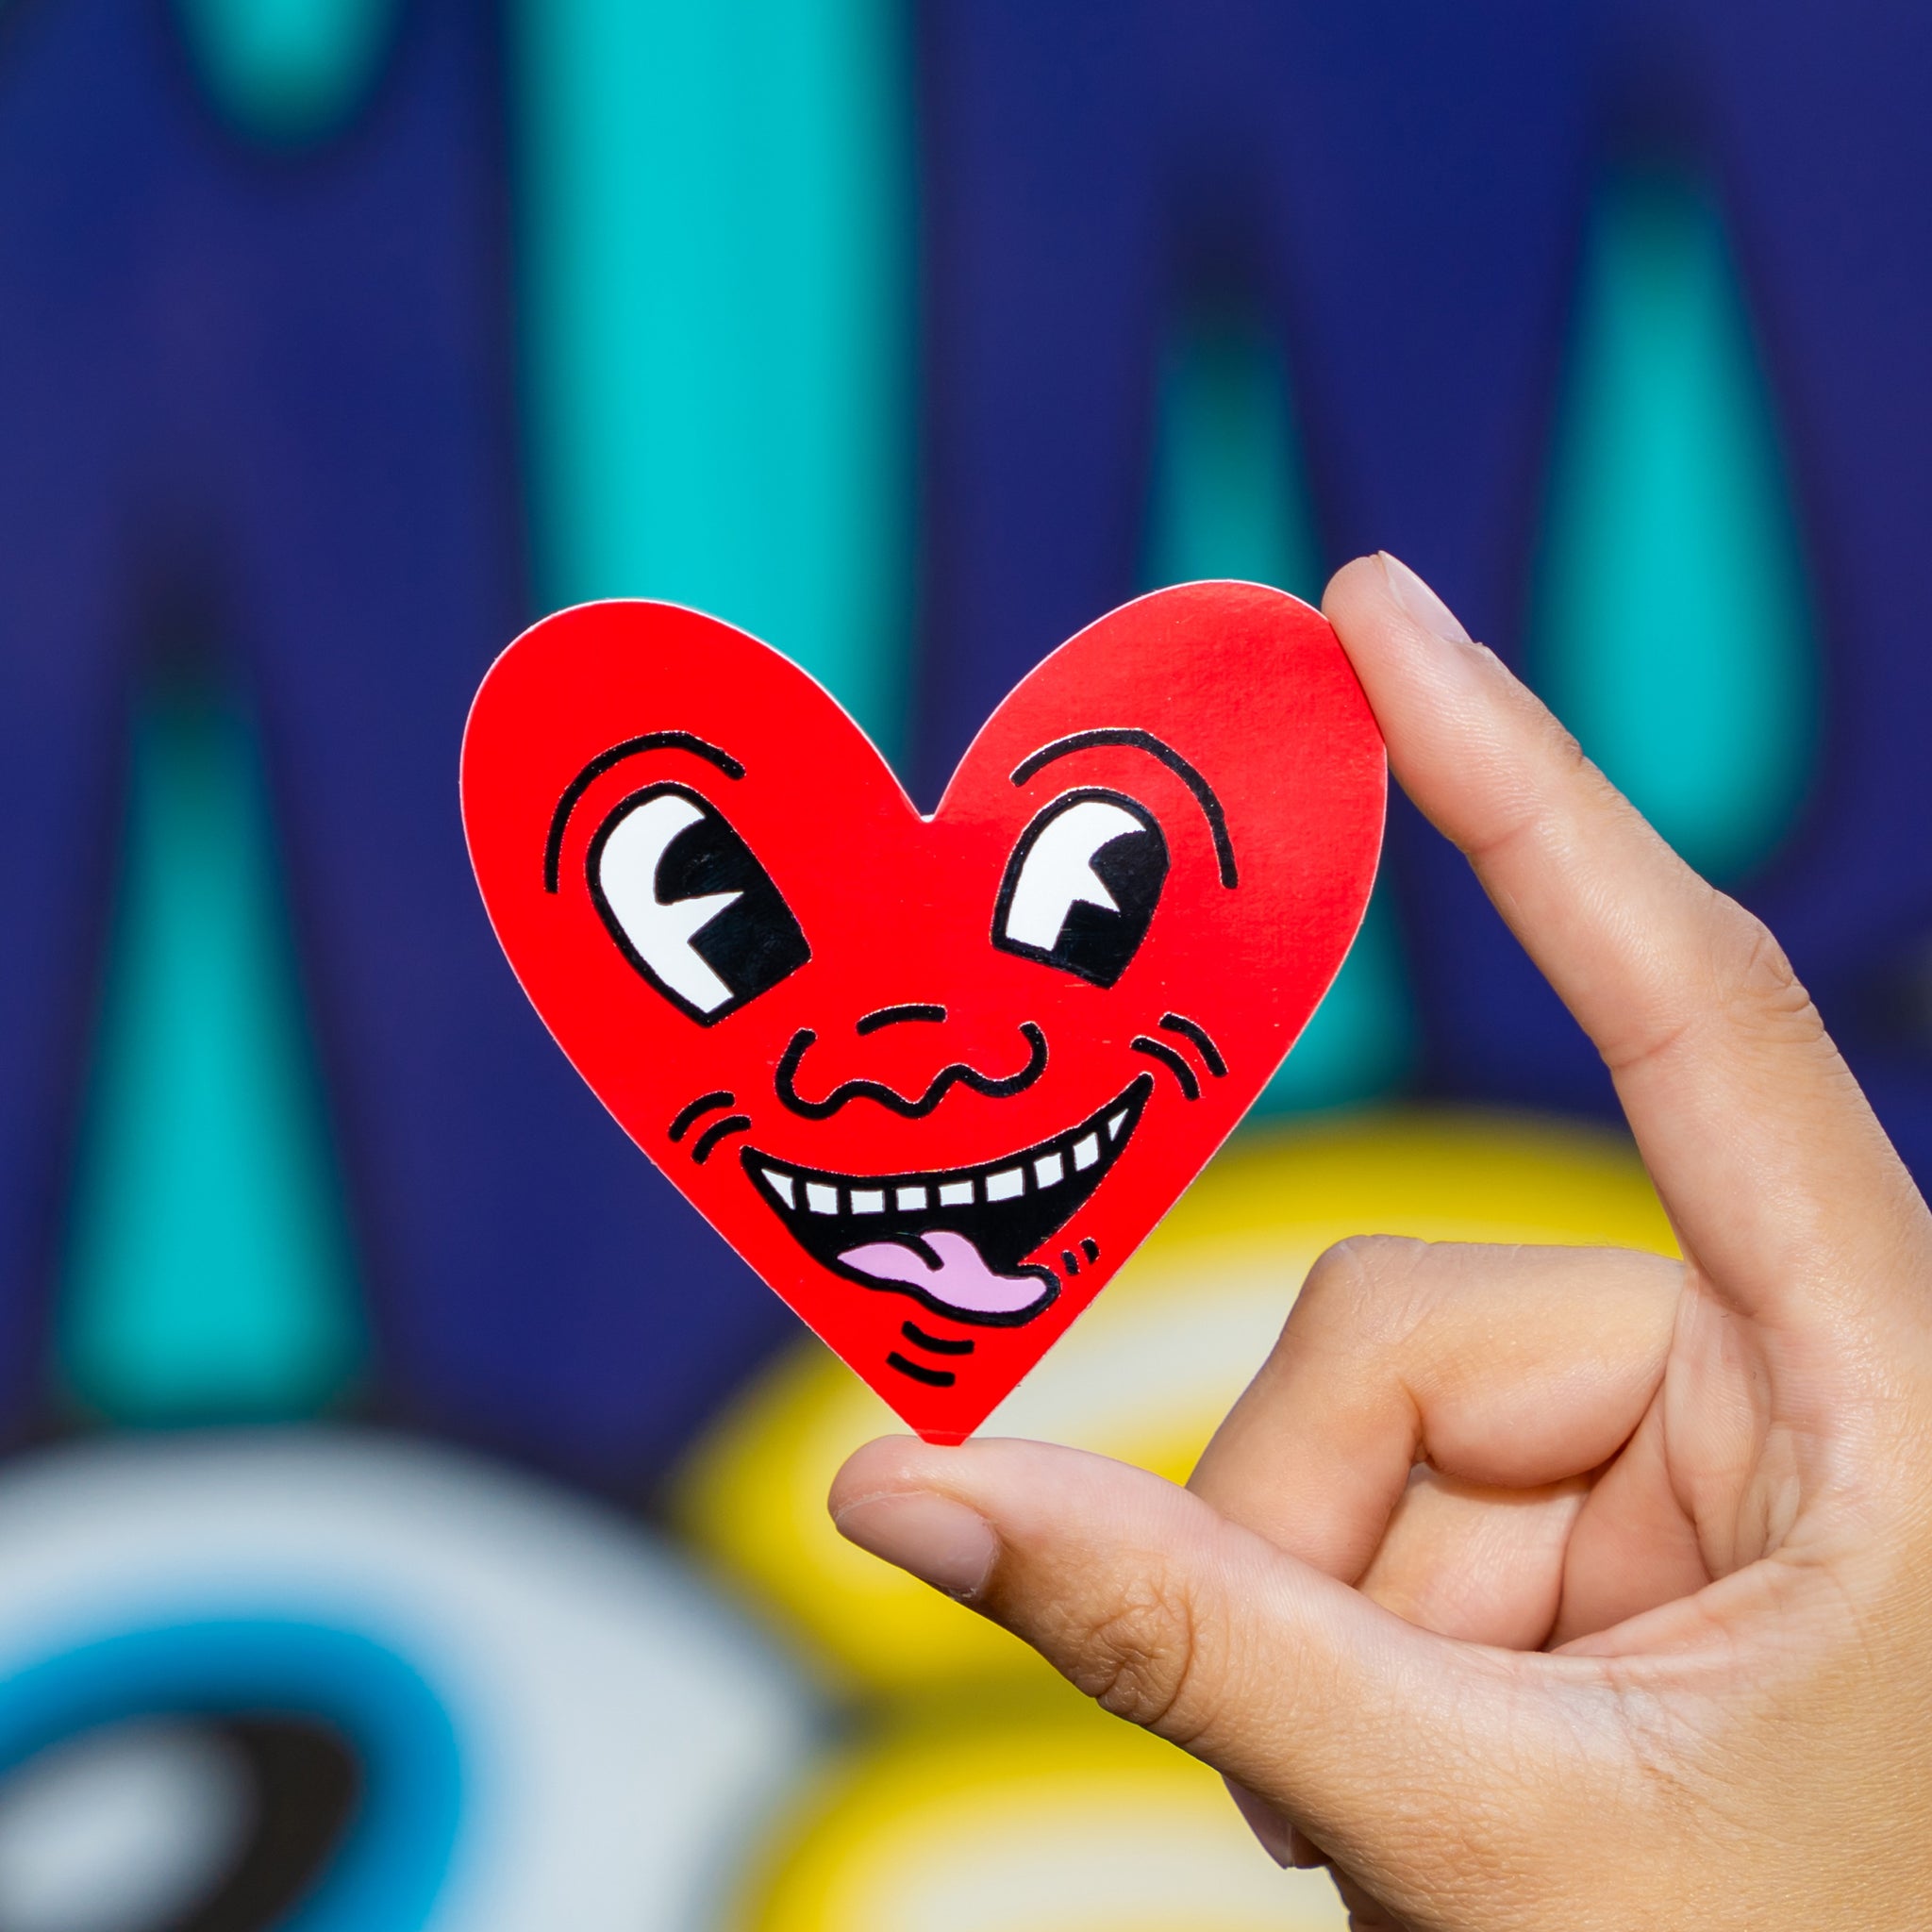 Keith Haring Heart Single Sticker